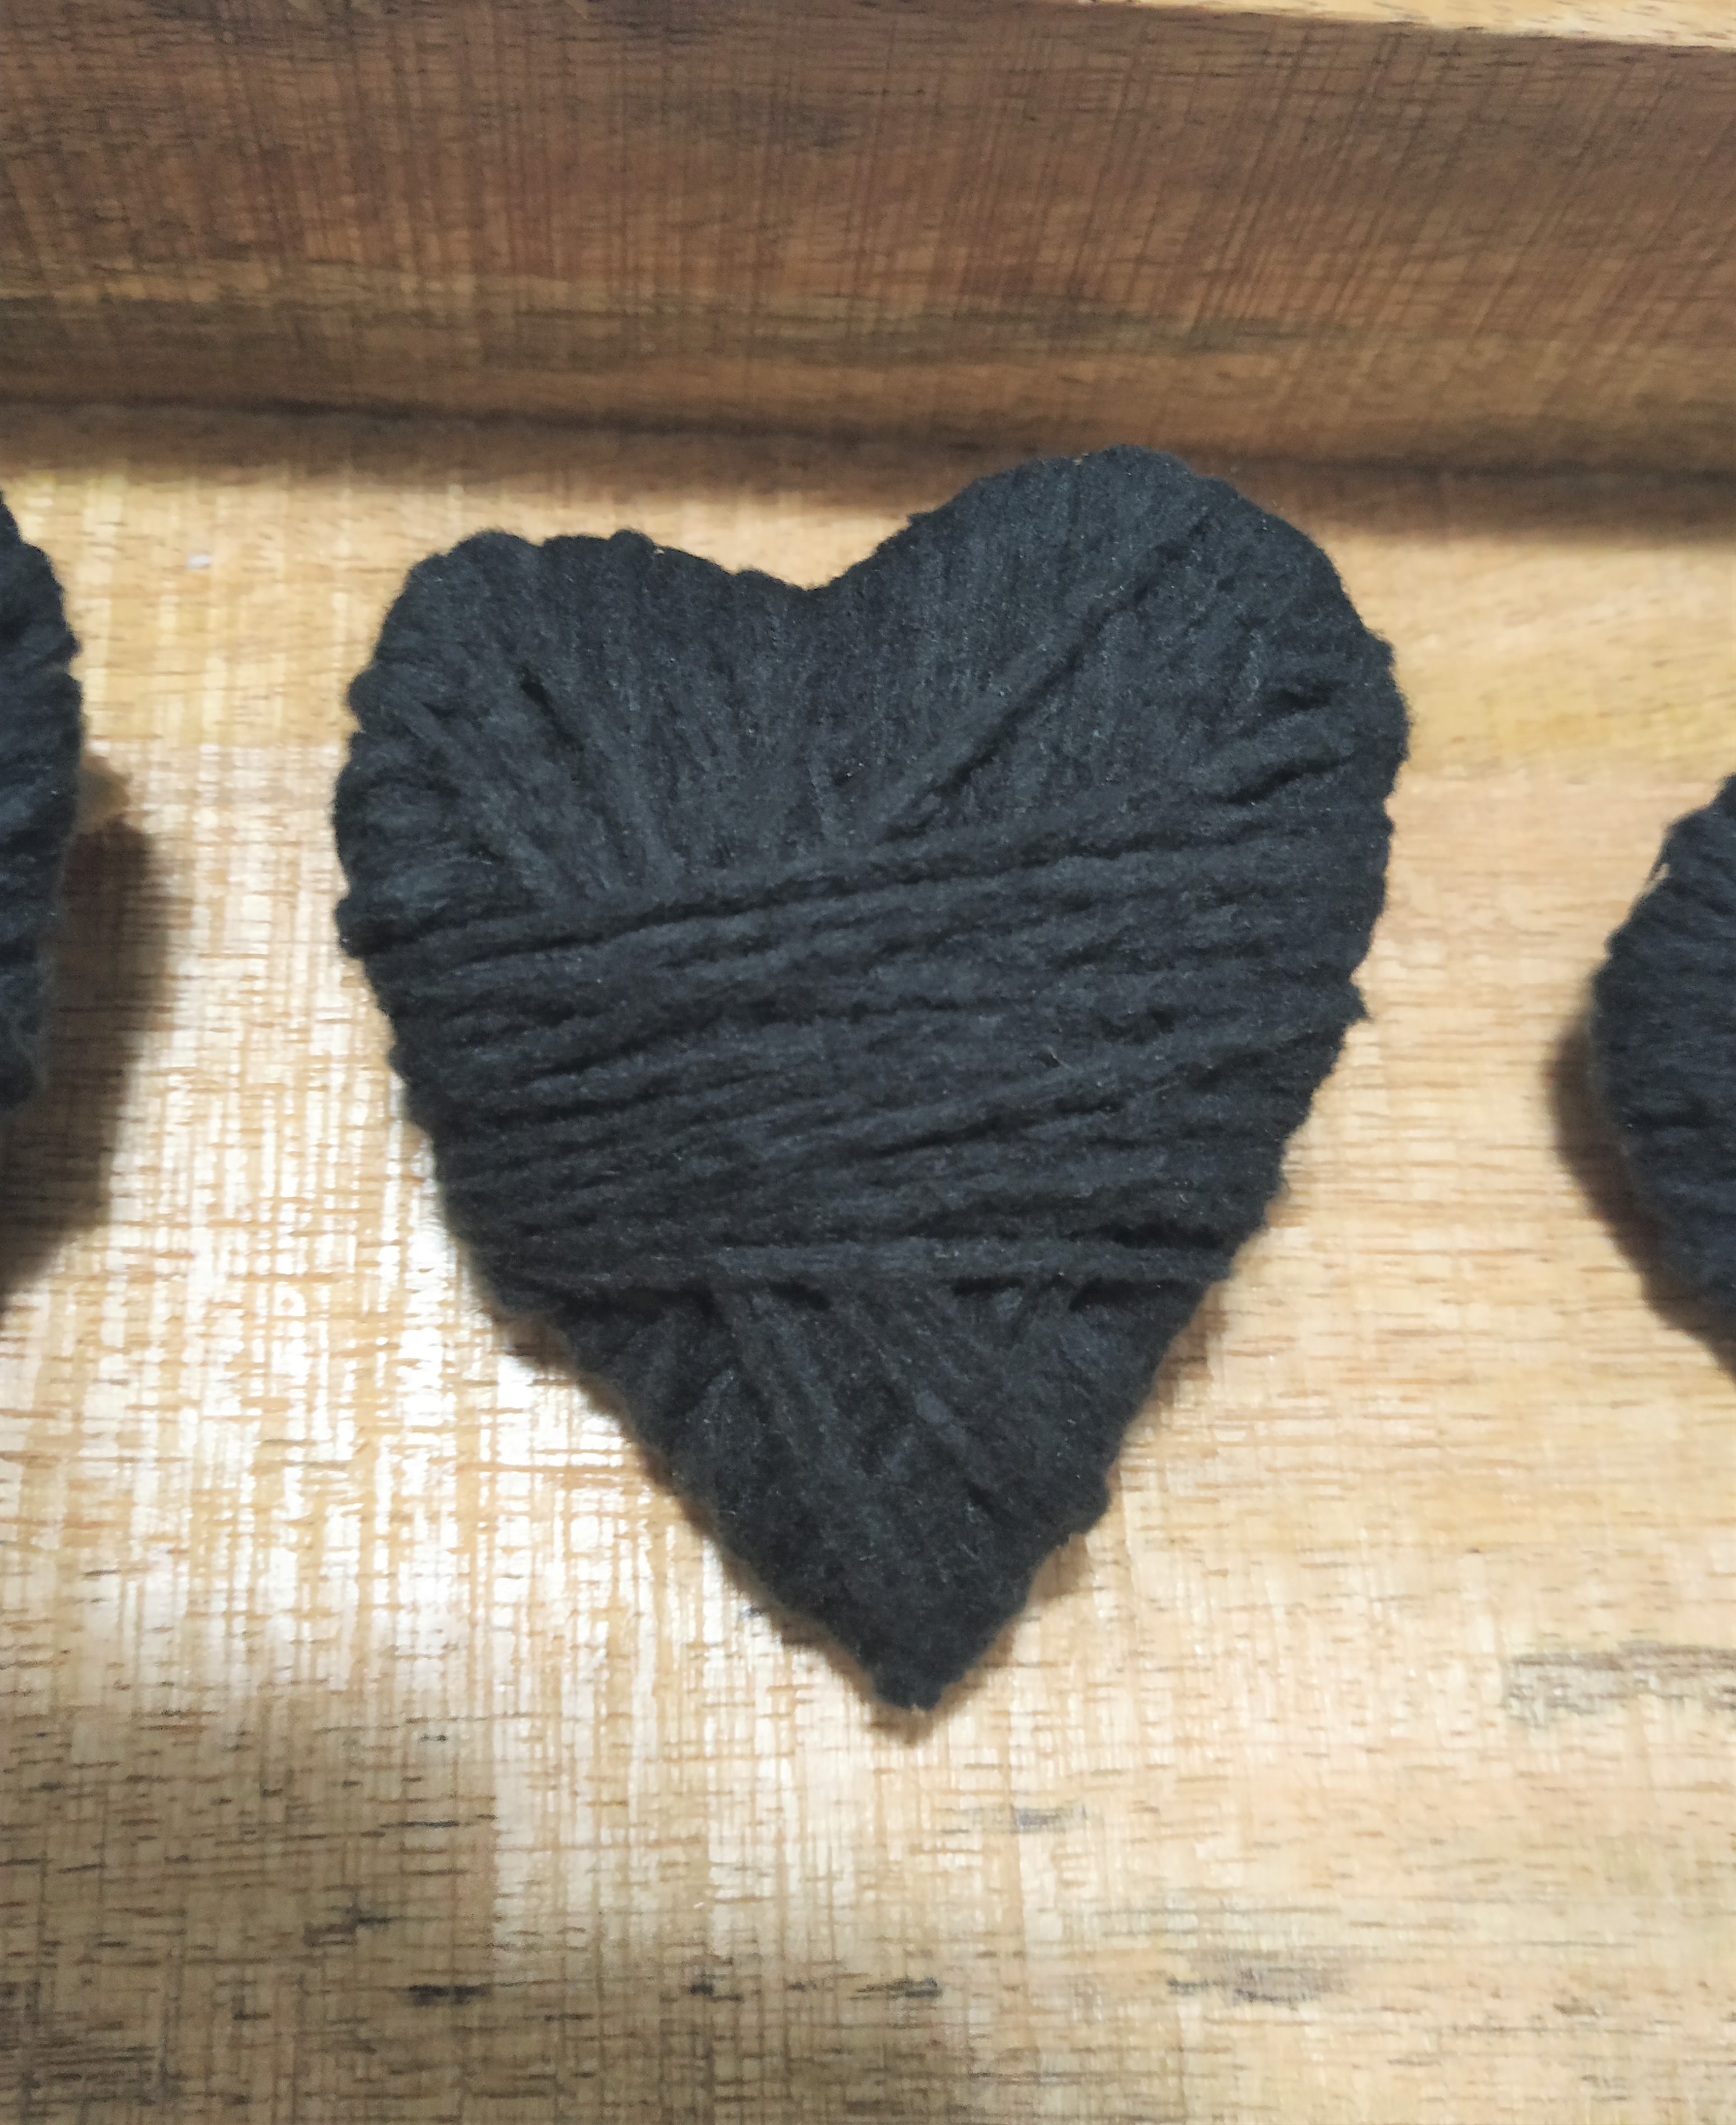 Black yarn wrapped heart.